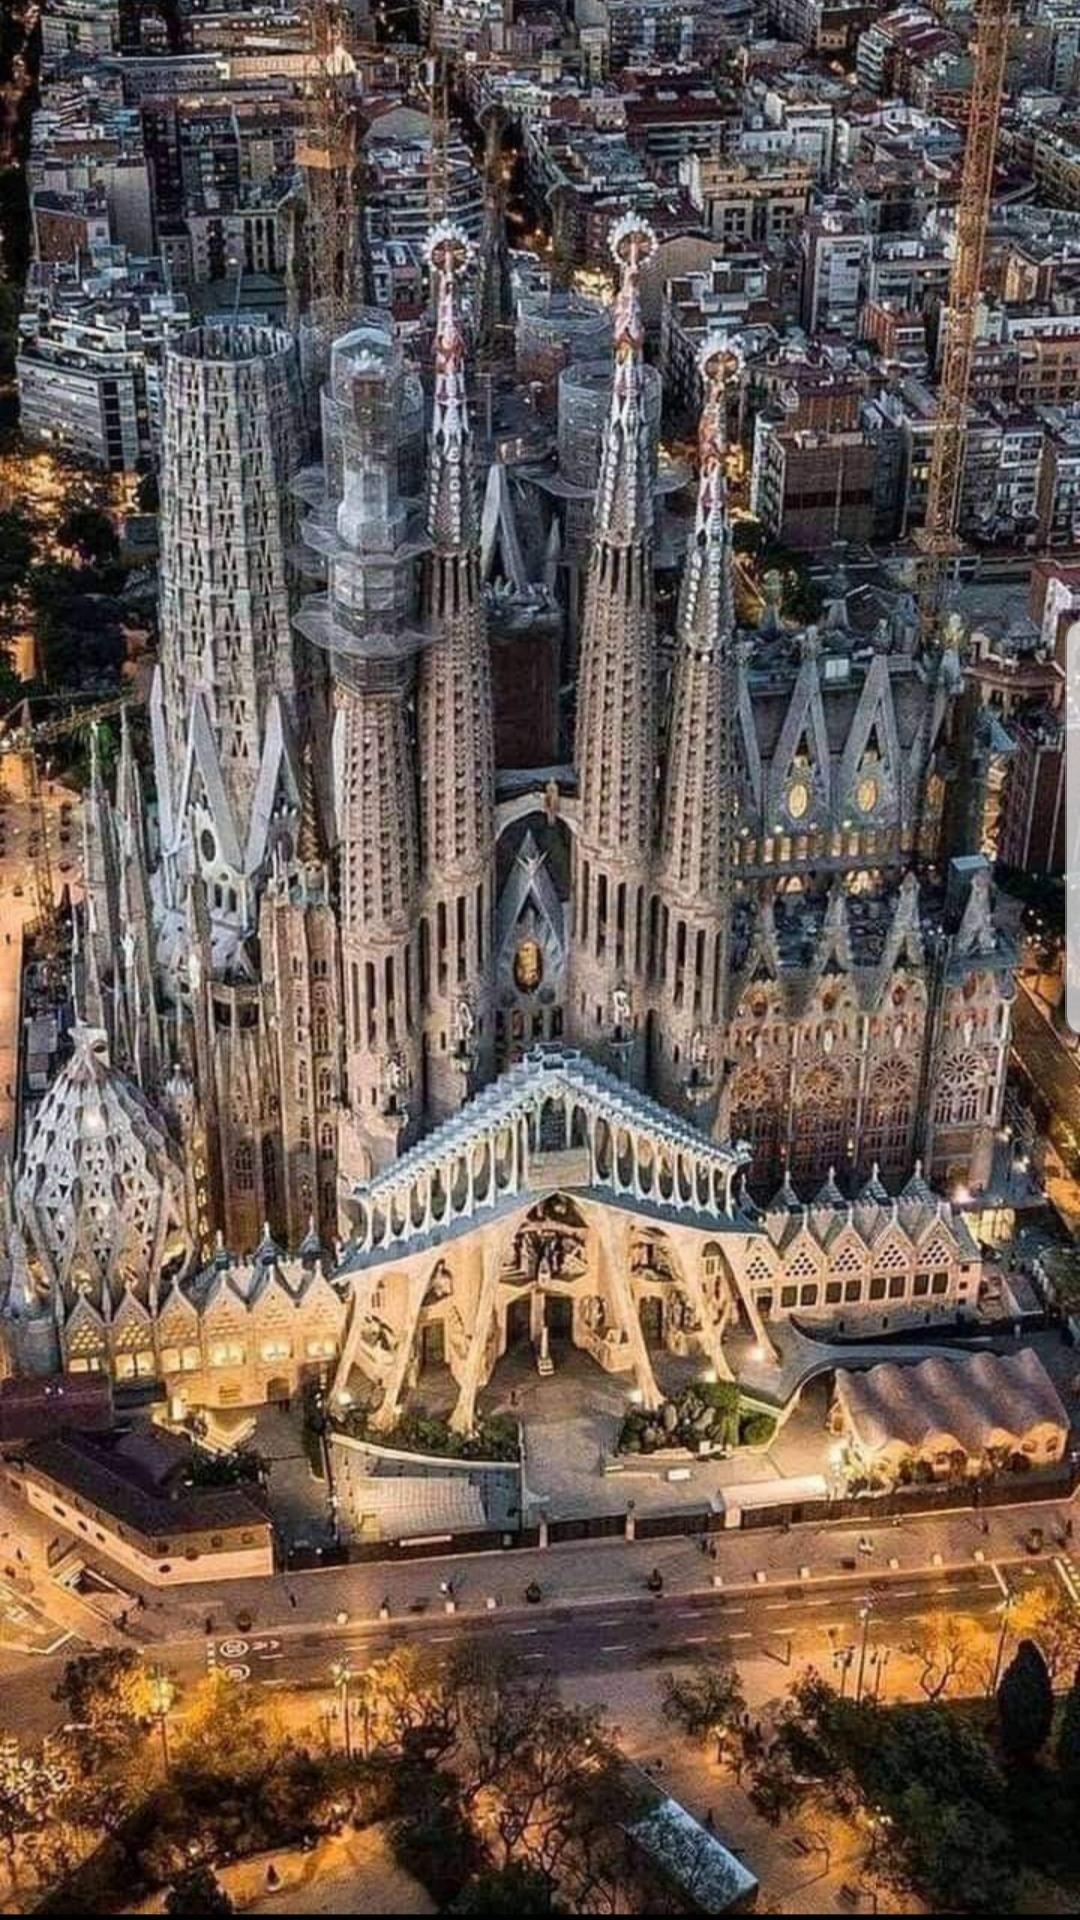 architecturealliance:
“Sagrada Familia, Barcelona, Spain
”